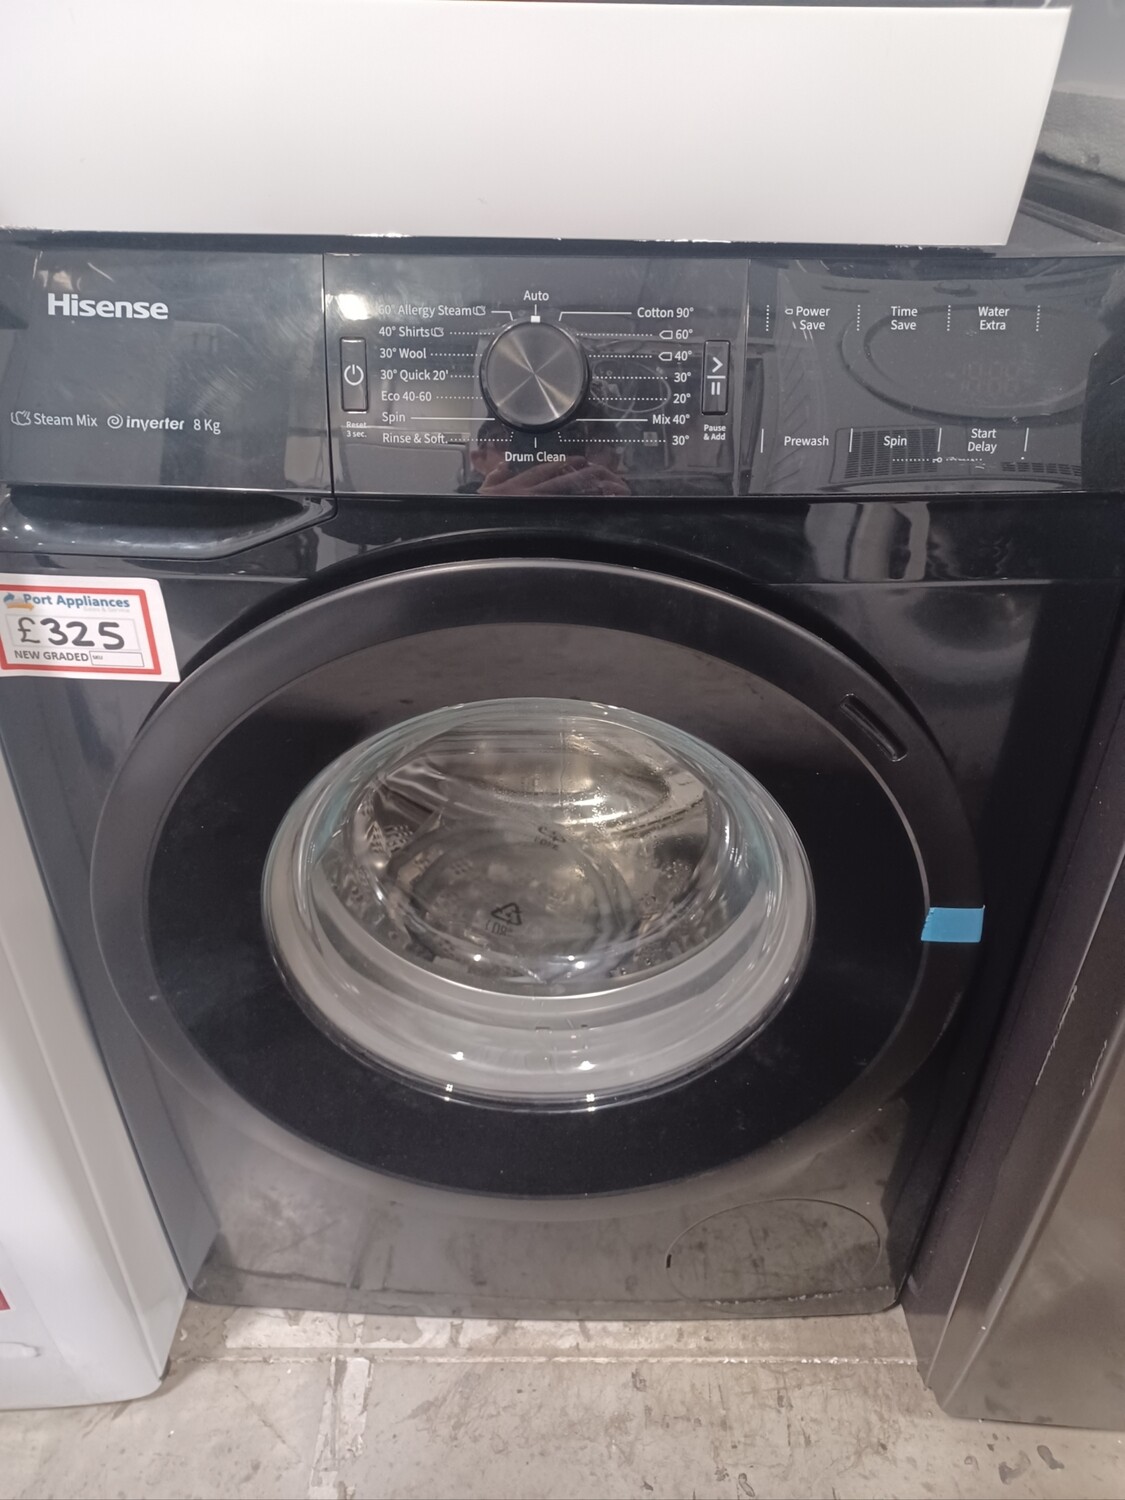 Hisense 8kg Load, 1400 Spin Washing Machine - Black - New Graded - 12 Month Guarantee